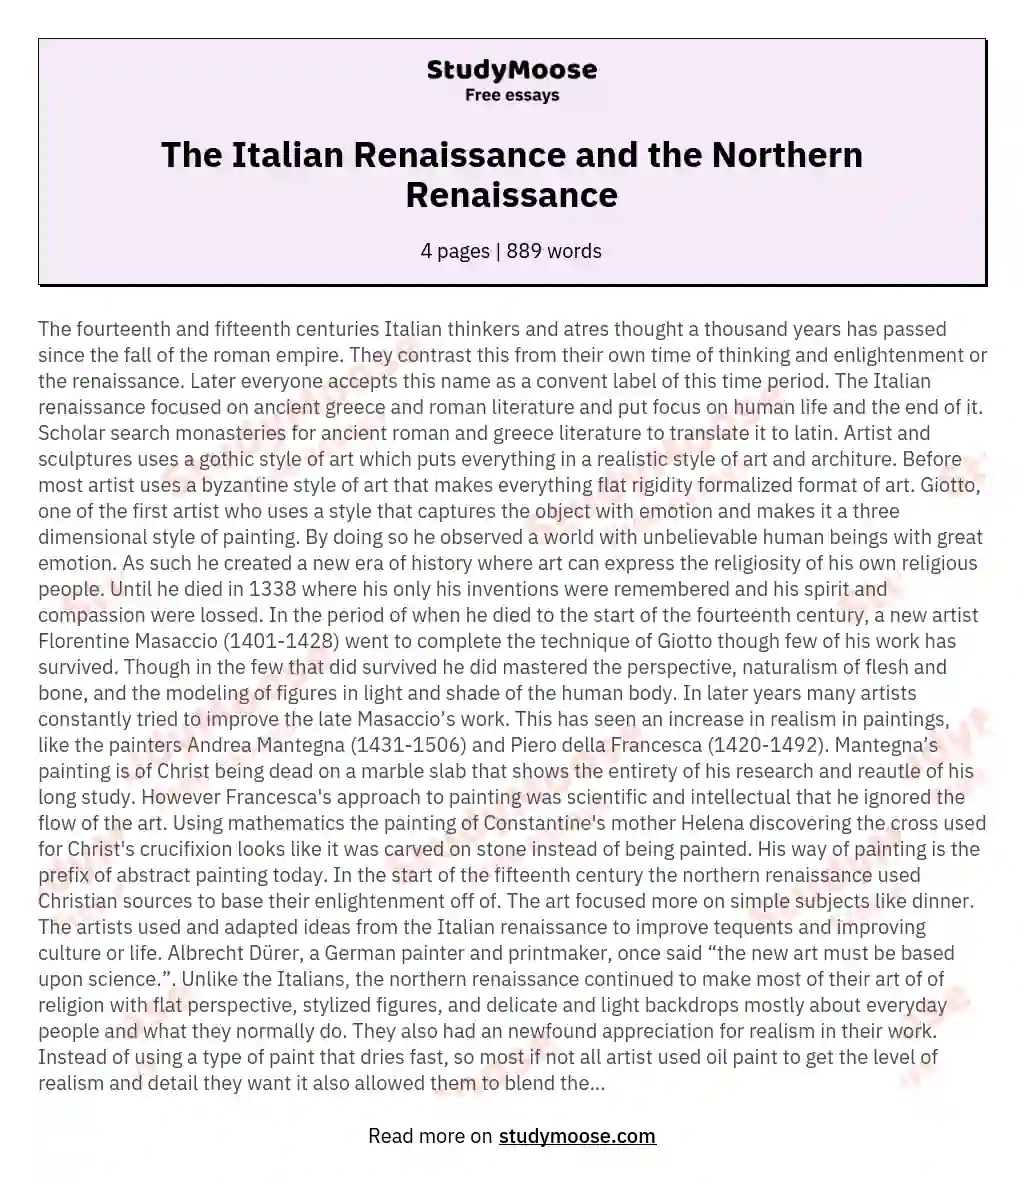 The Italian Renaissance and the Northern Renaissance essay